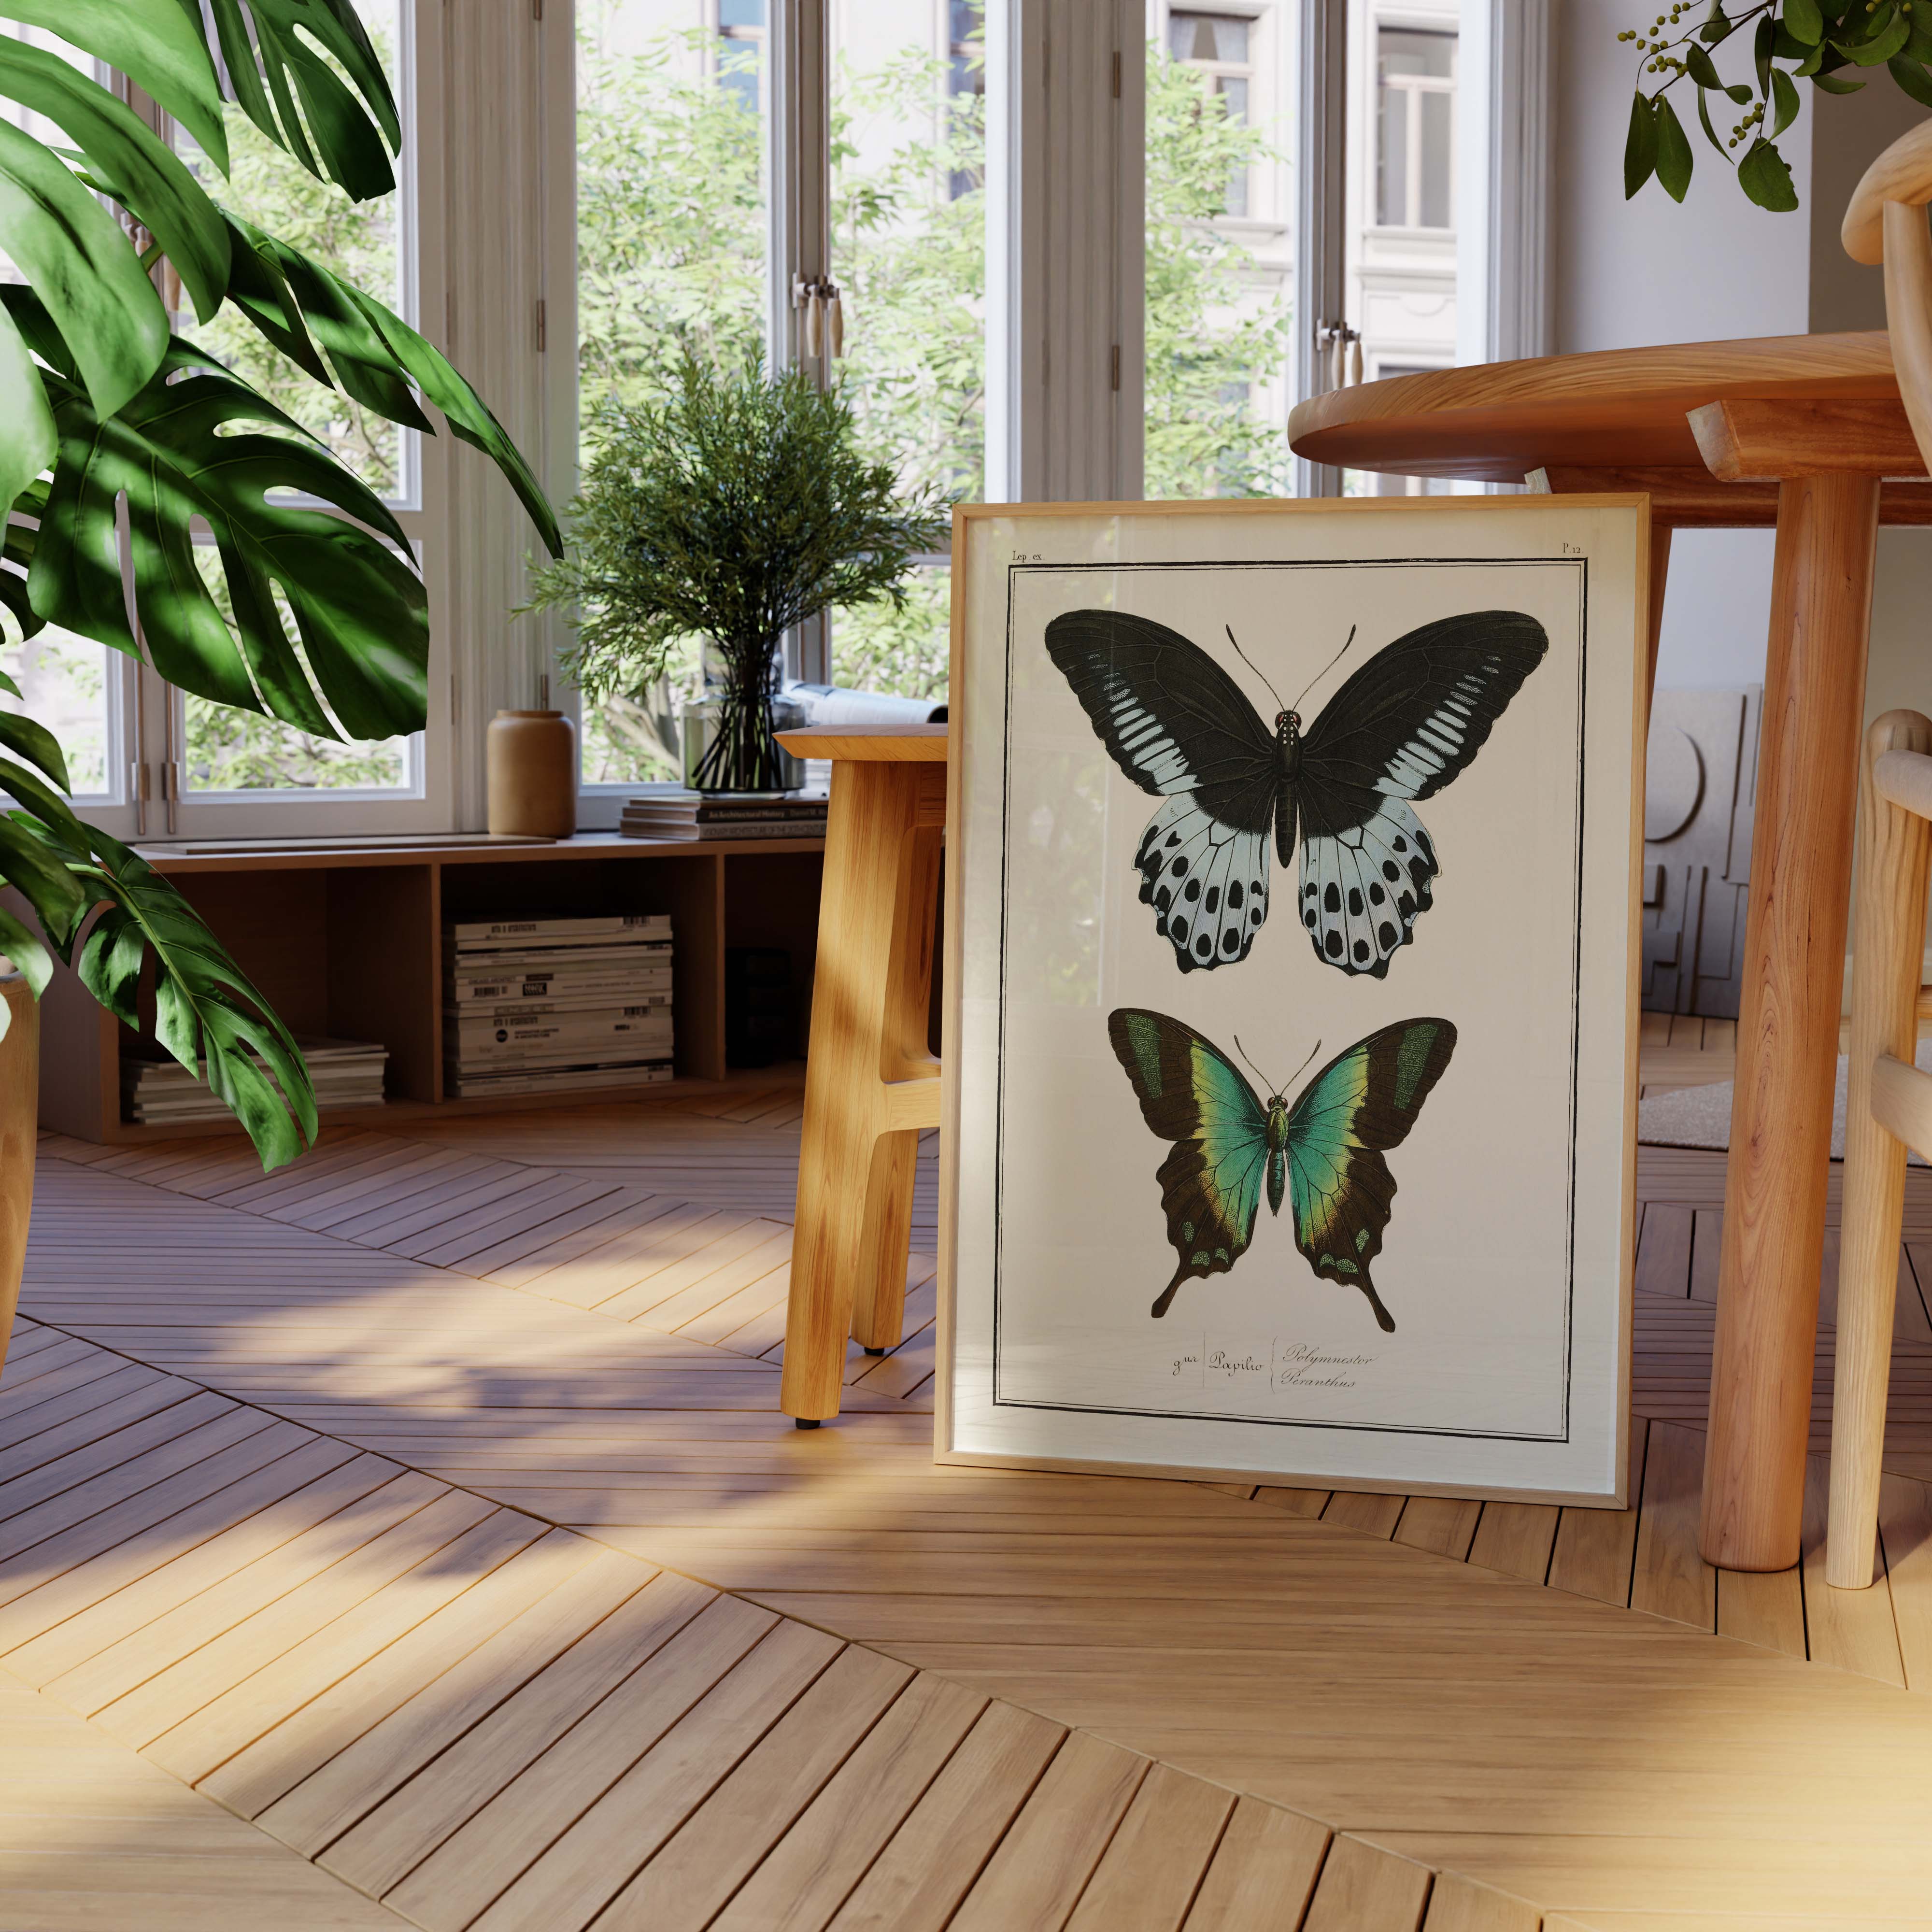 Planche d'entomologie Papillons - N°12-oneart.fr